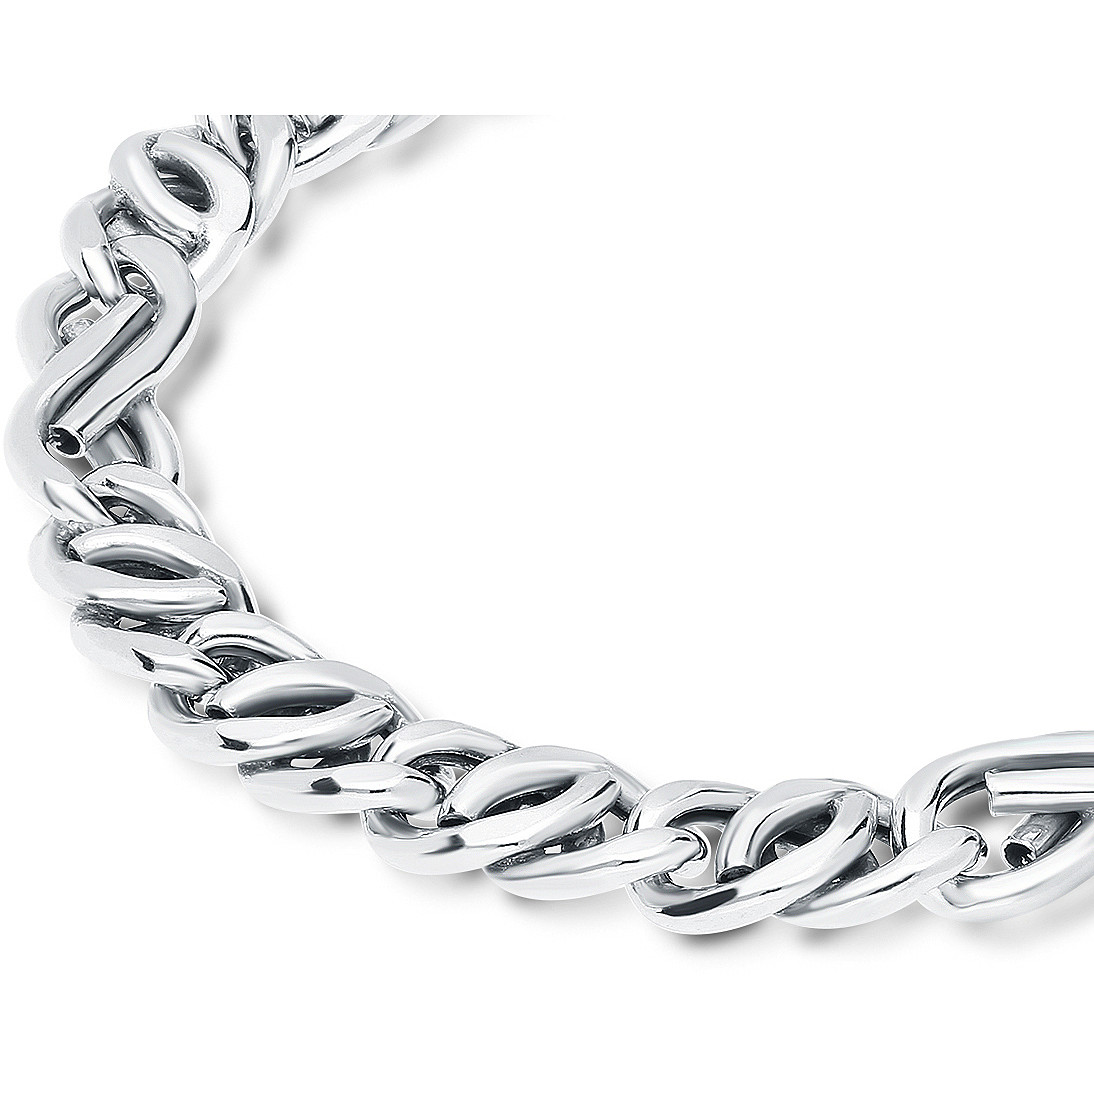 bracelet man Chain 925 Silver jewel GioiaPura lbOPVA180MR-B